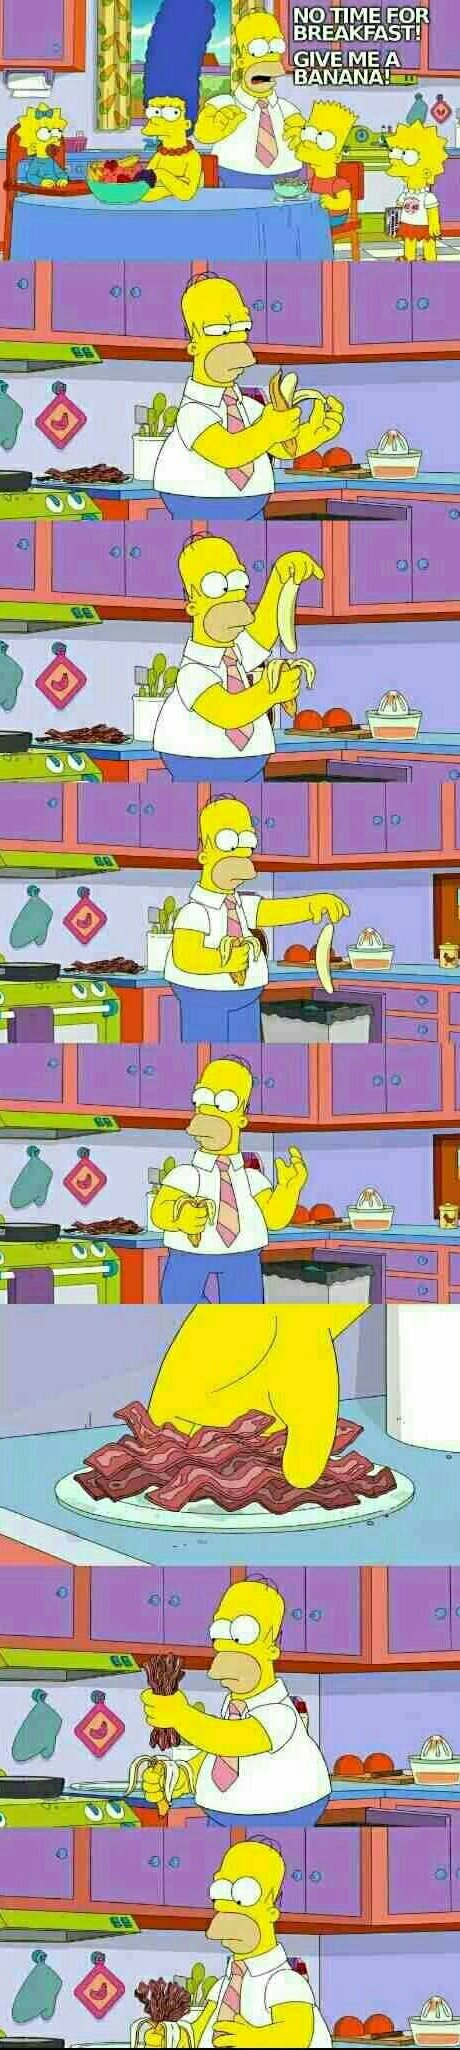 Homero loquillo - meme